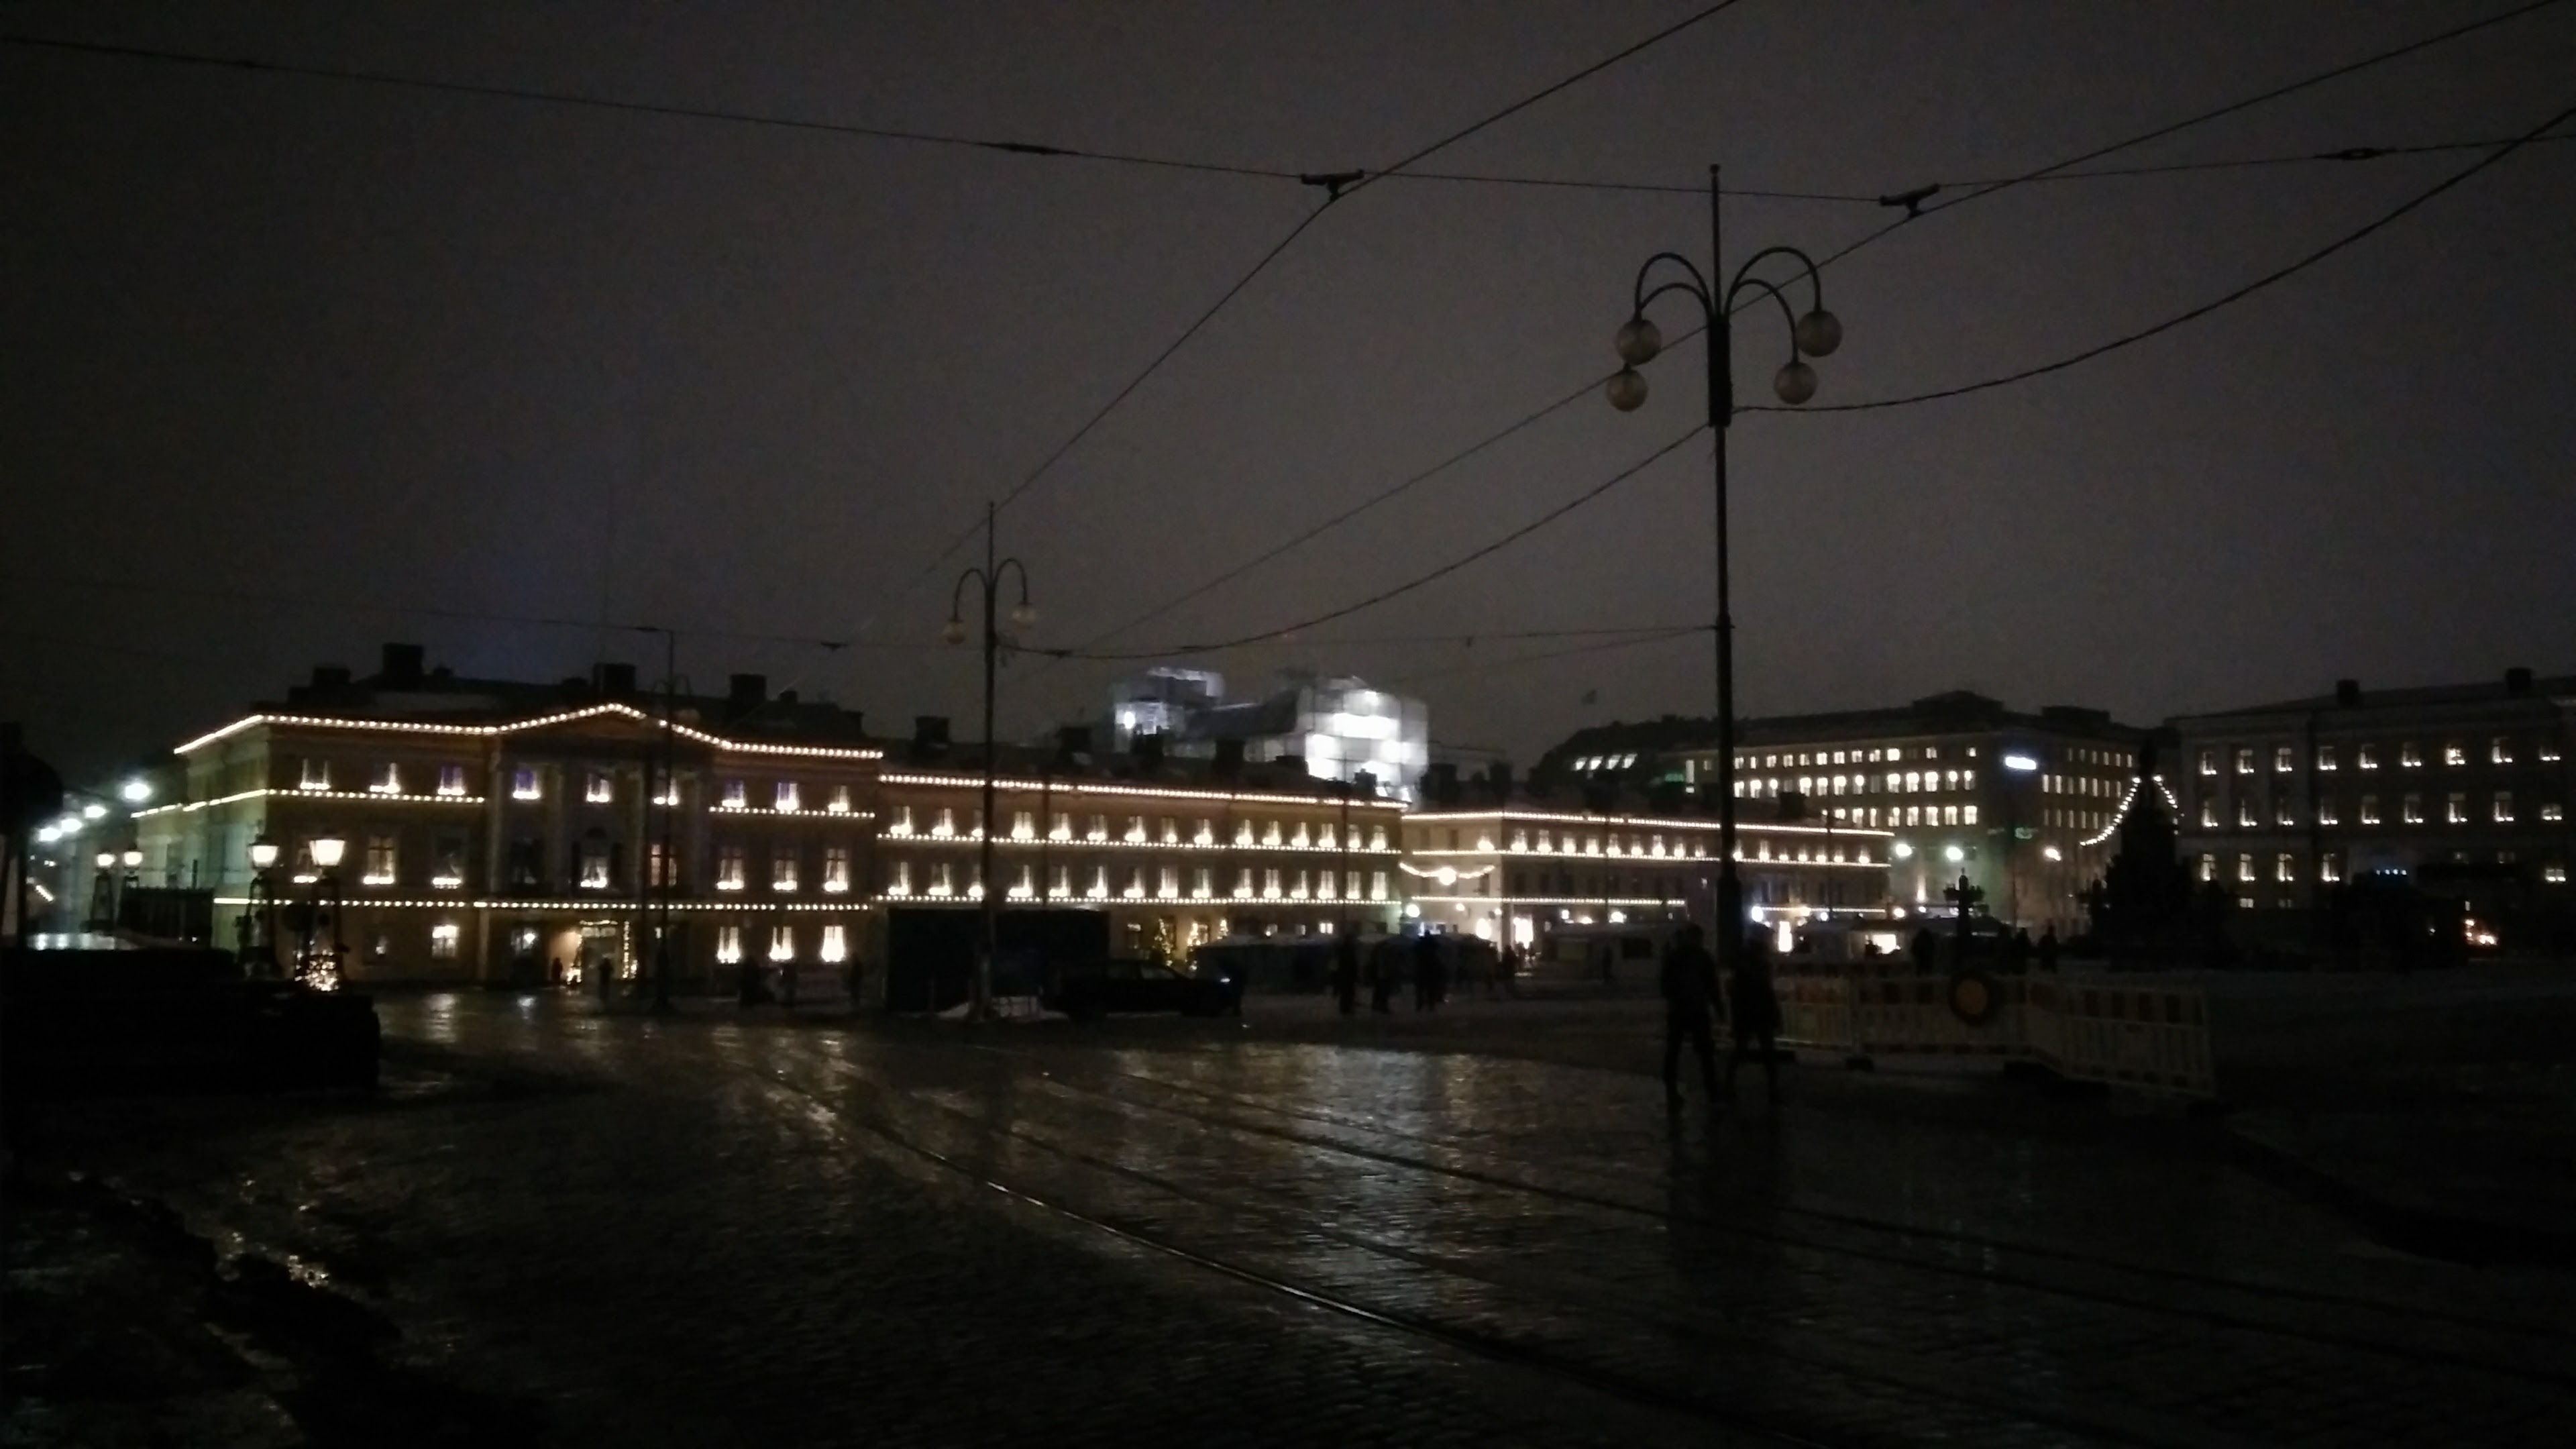 Lighted house behind a dark Senate Square